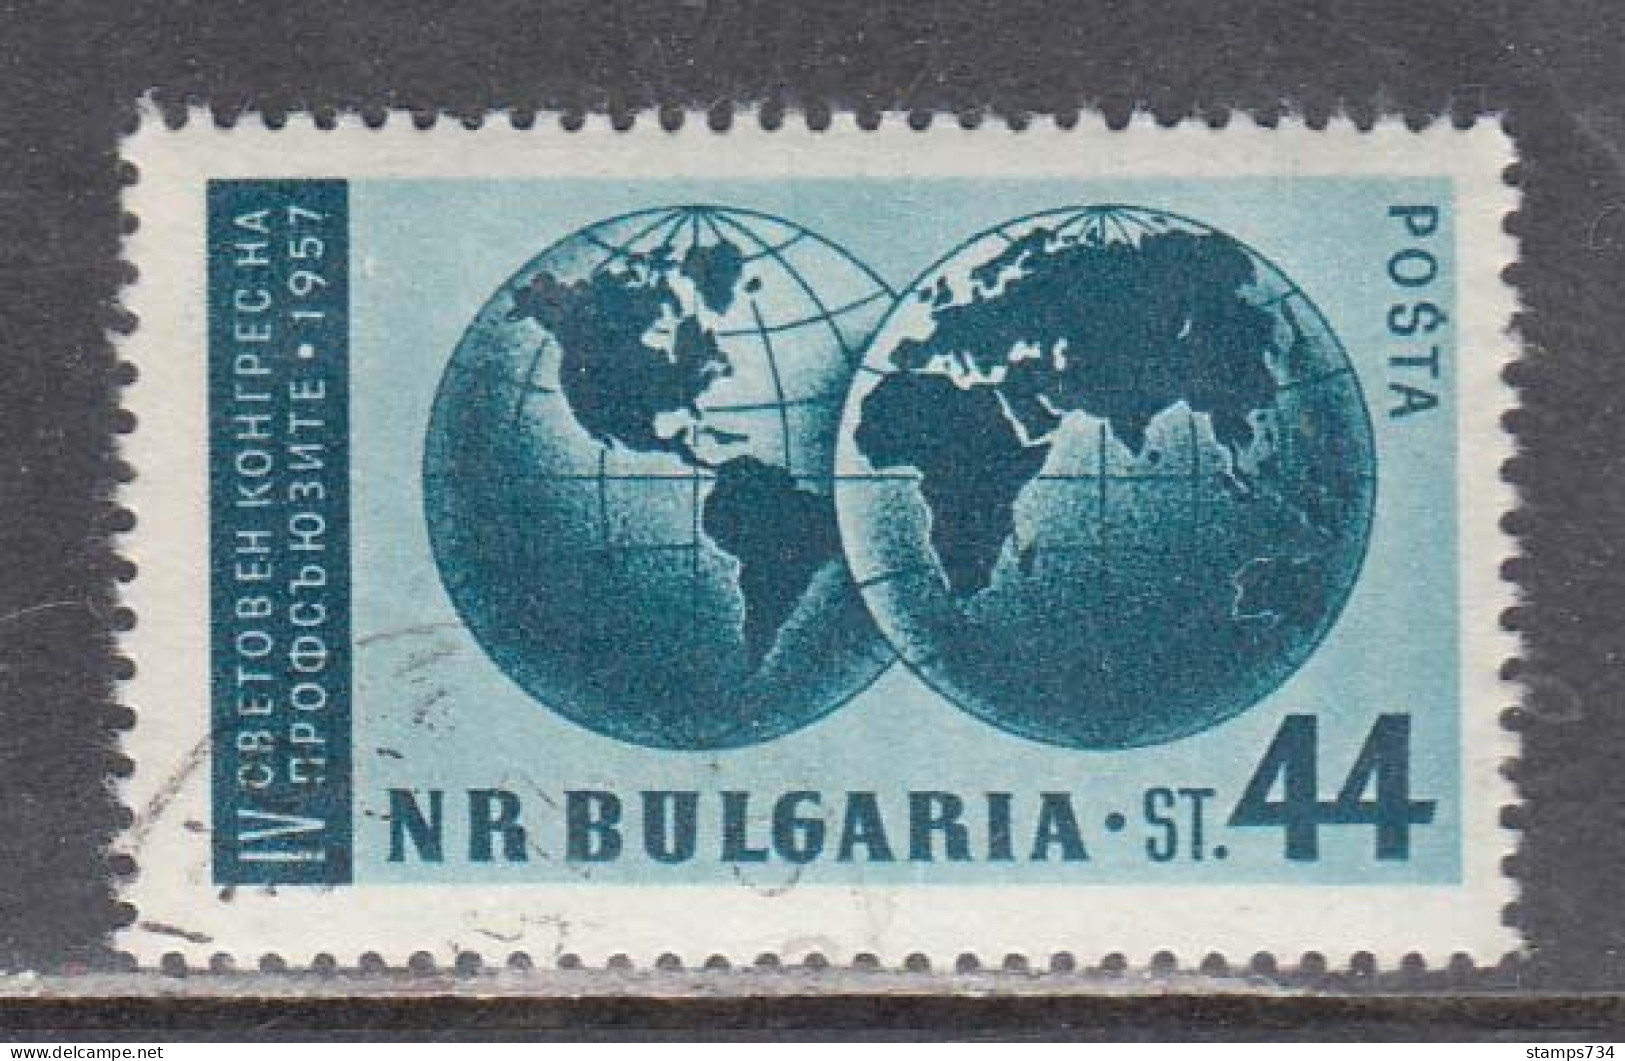 Bulgaria 1957 - Trade Union Congress, Leipzig, Mi-Nr. 1040, Used - Oblitérés